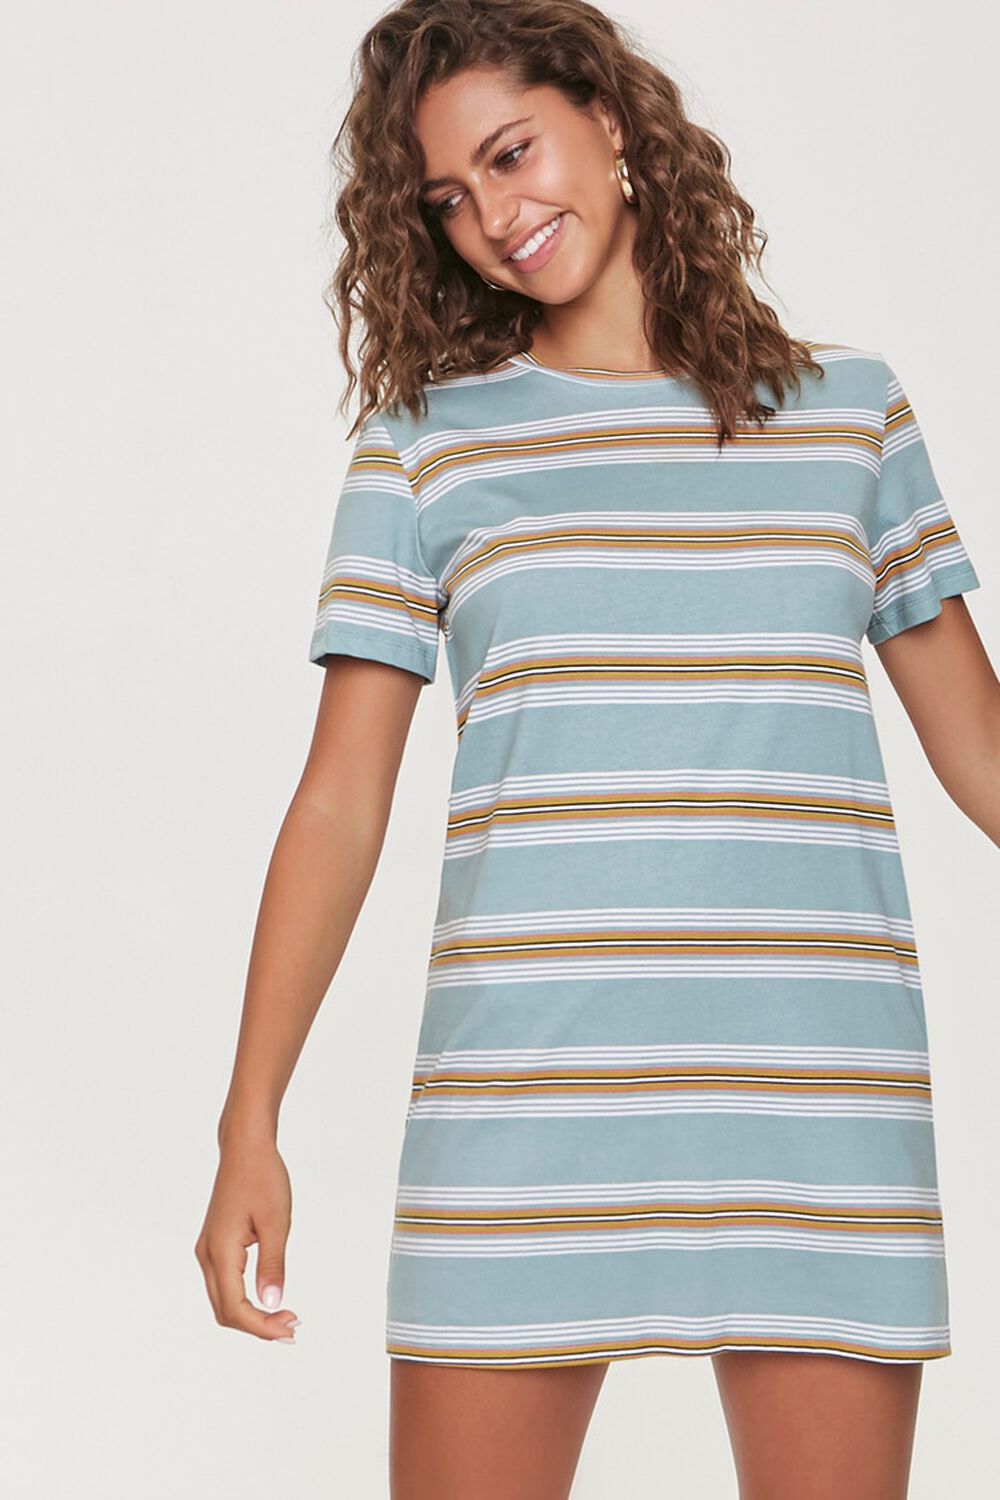 Striped Crew T-Shirt Dress, image 1